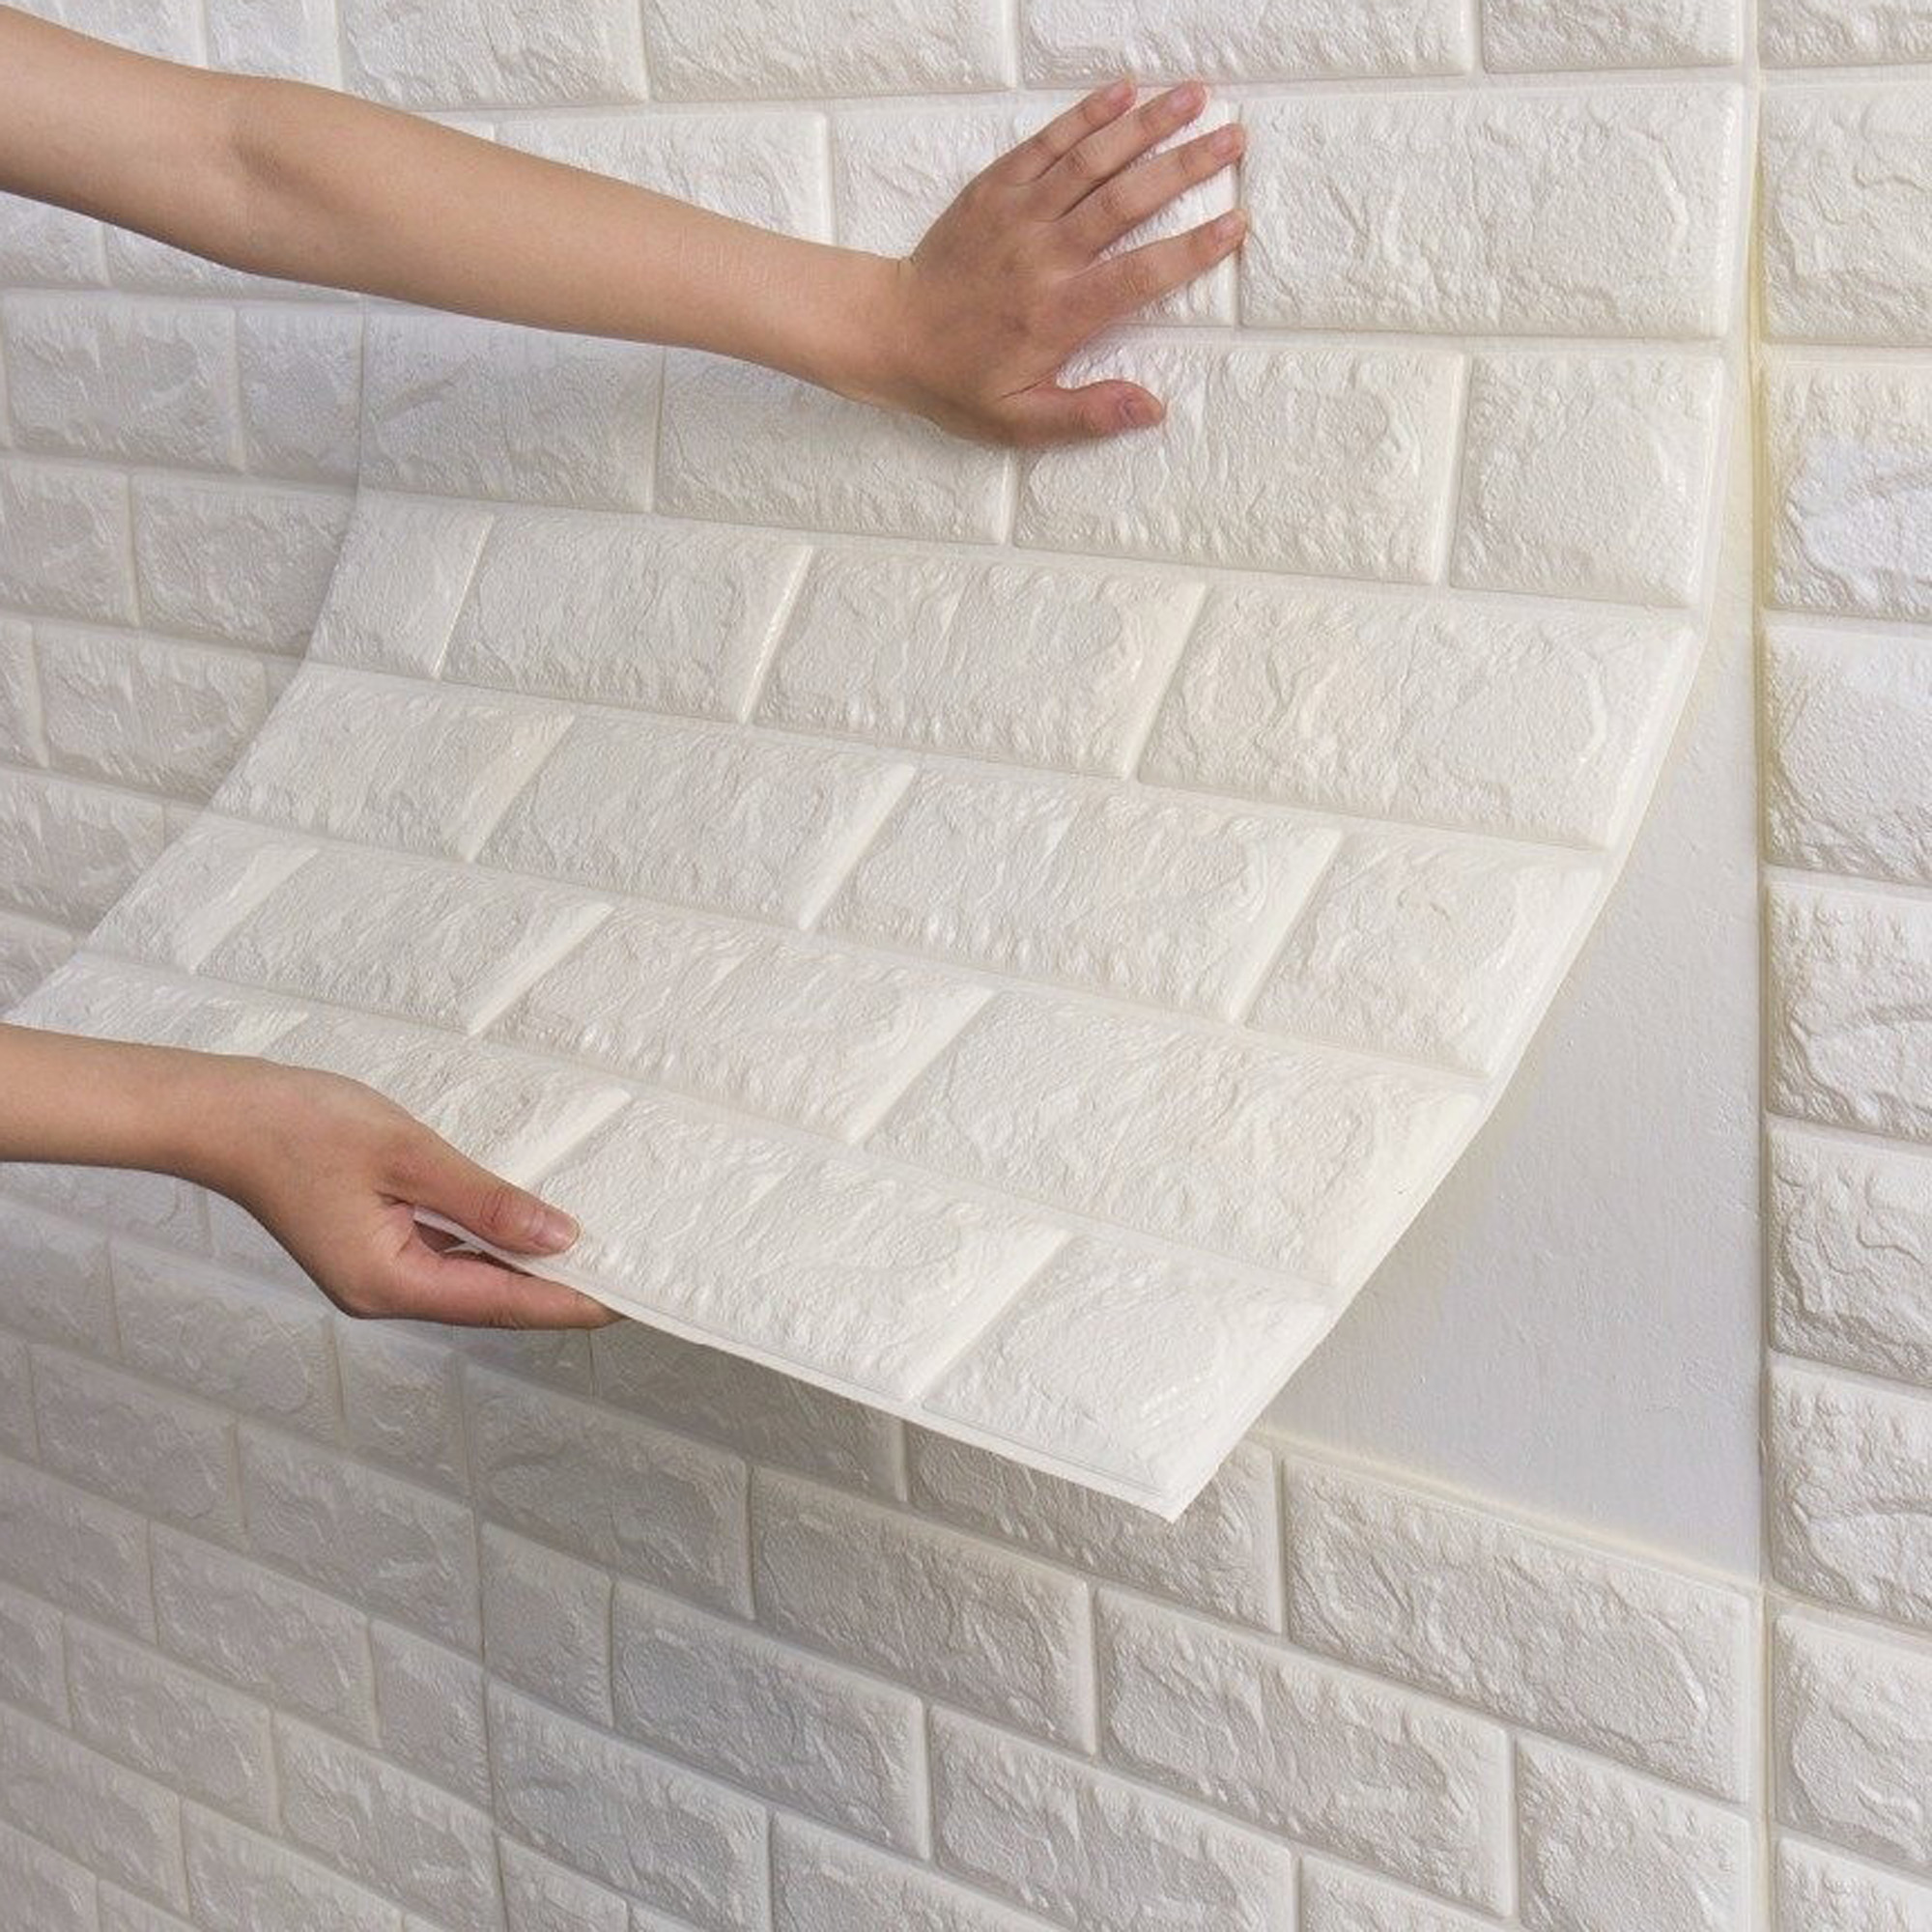 1 Pc 12x24 inch 3D Brick Wall Panels, 3D Foam Panels Stone Brick Ceramic Wall Stickers Self-adhesive Wallpaper Decor - image 4 of 8